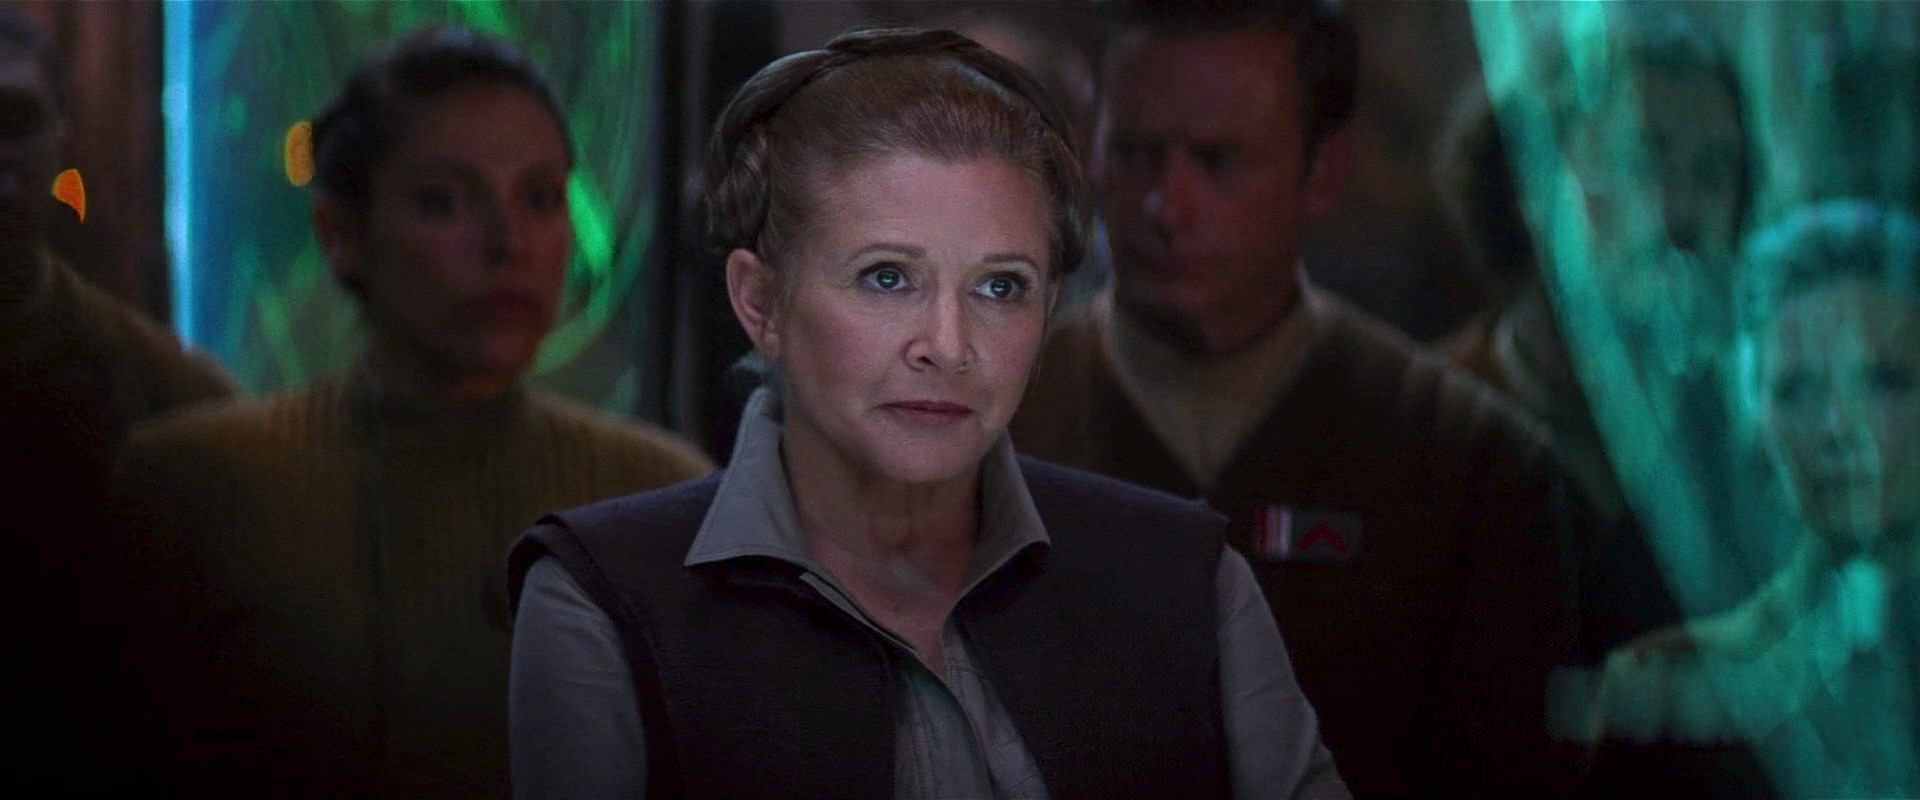 Star Wars: The Force Awakens - General Leia Organa